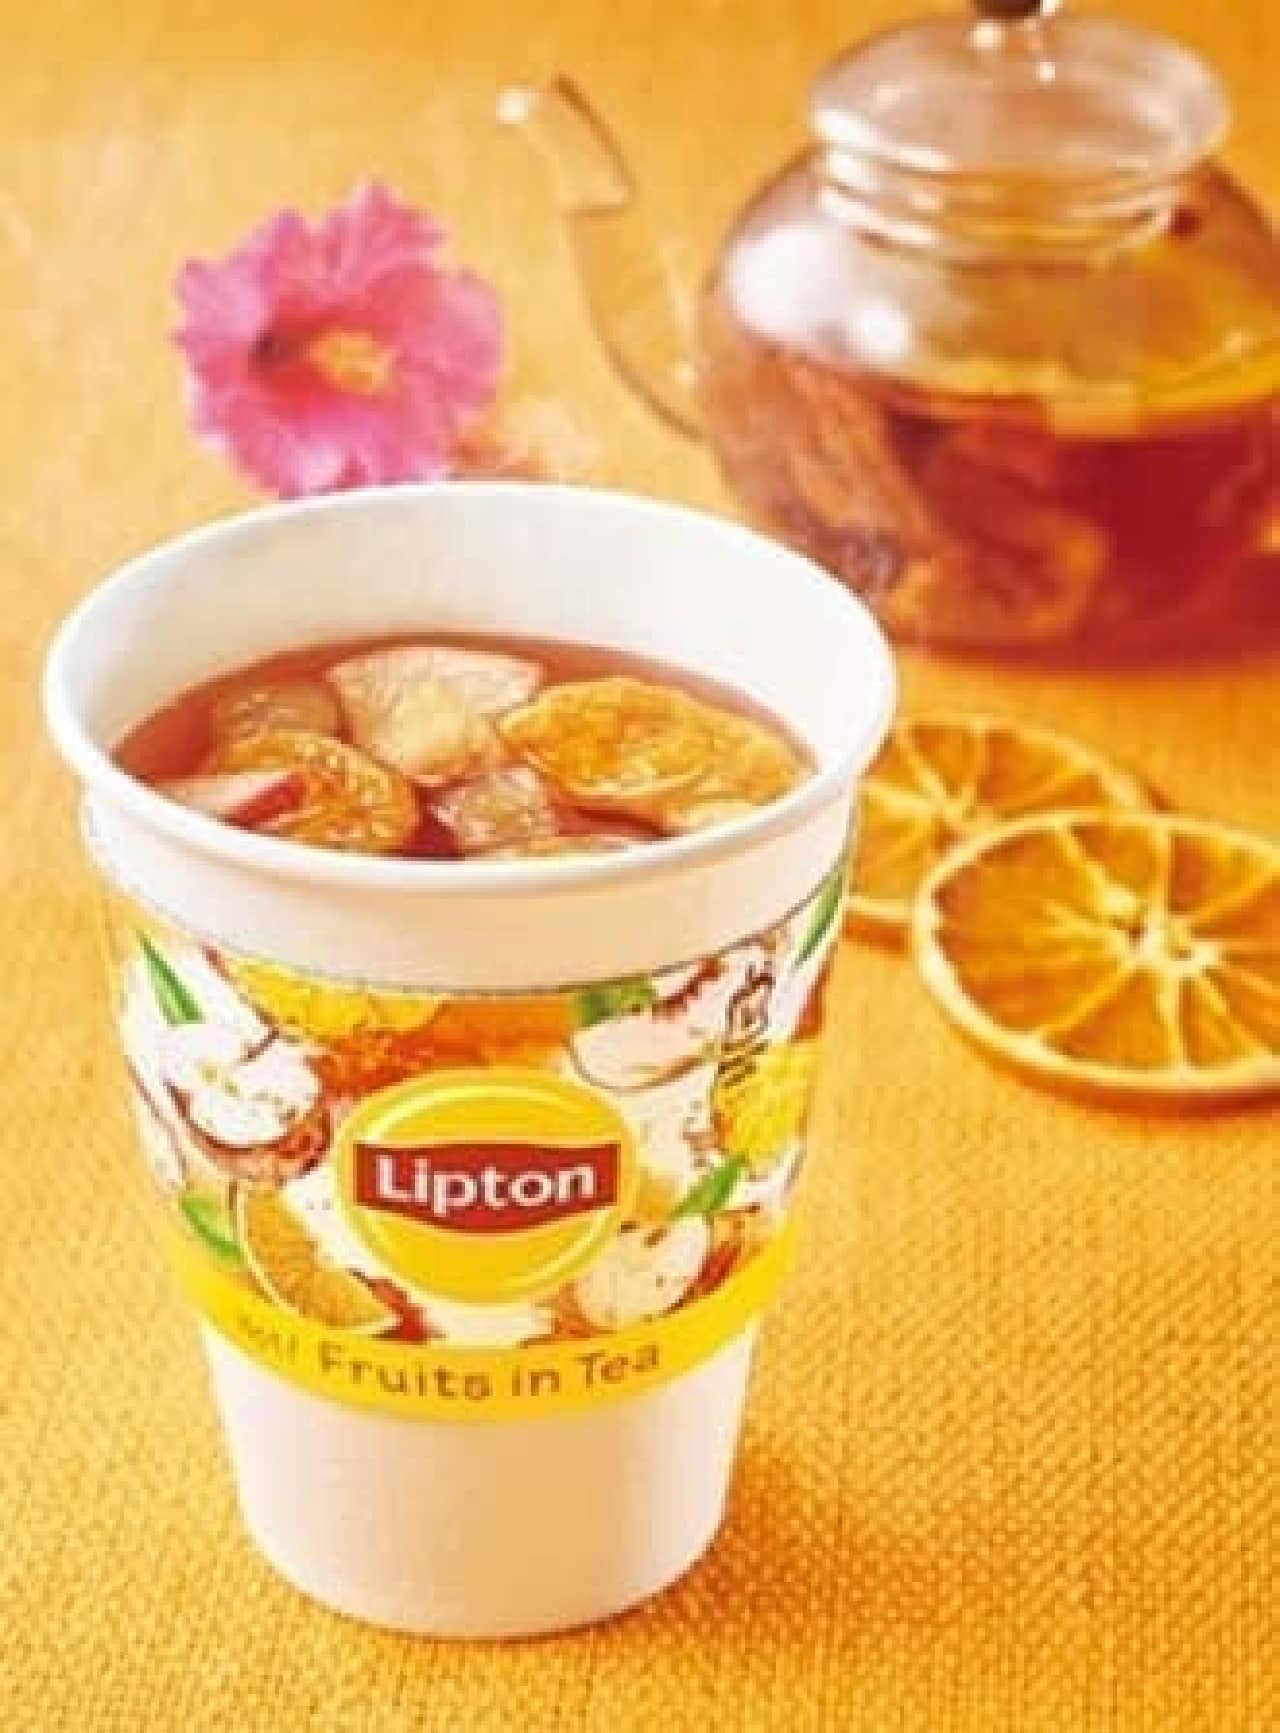 Lawson "MACHI cafe Lipton Hot Fruit In Tea"